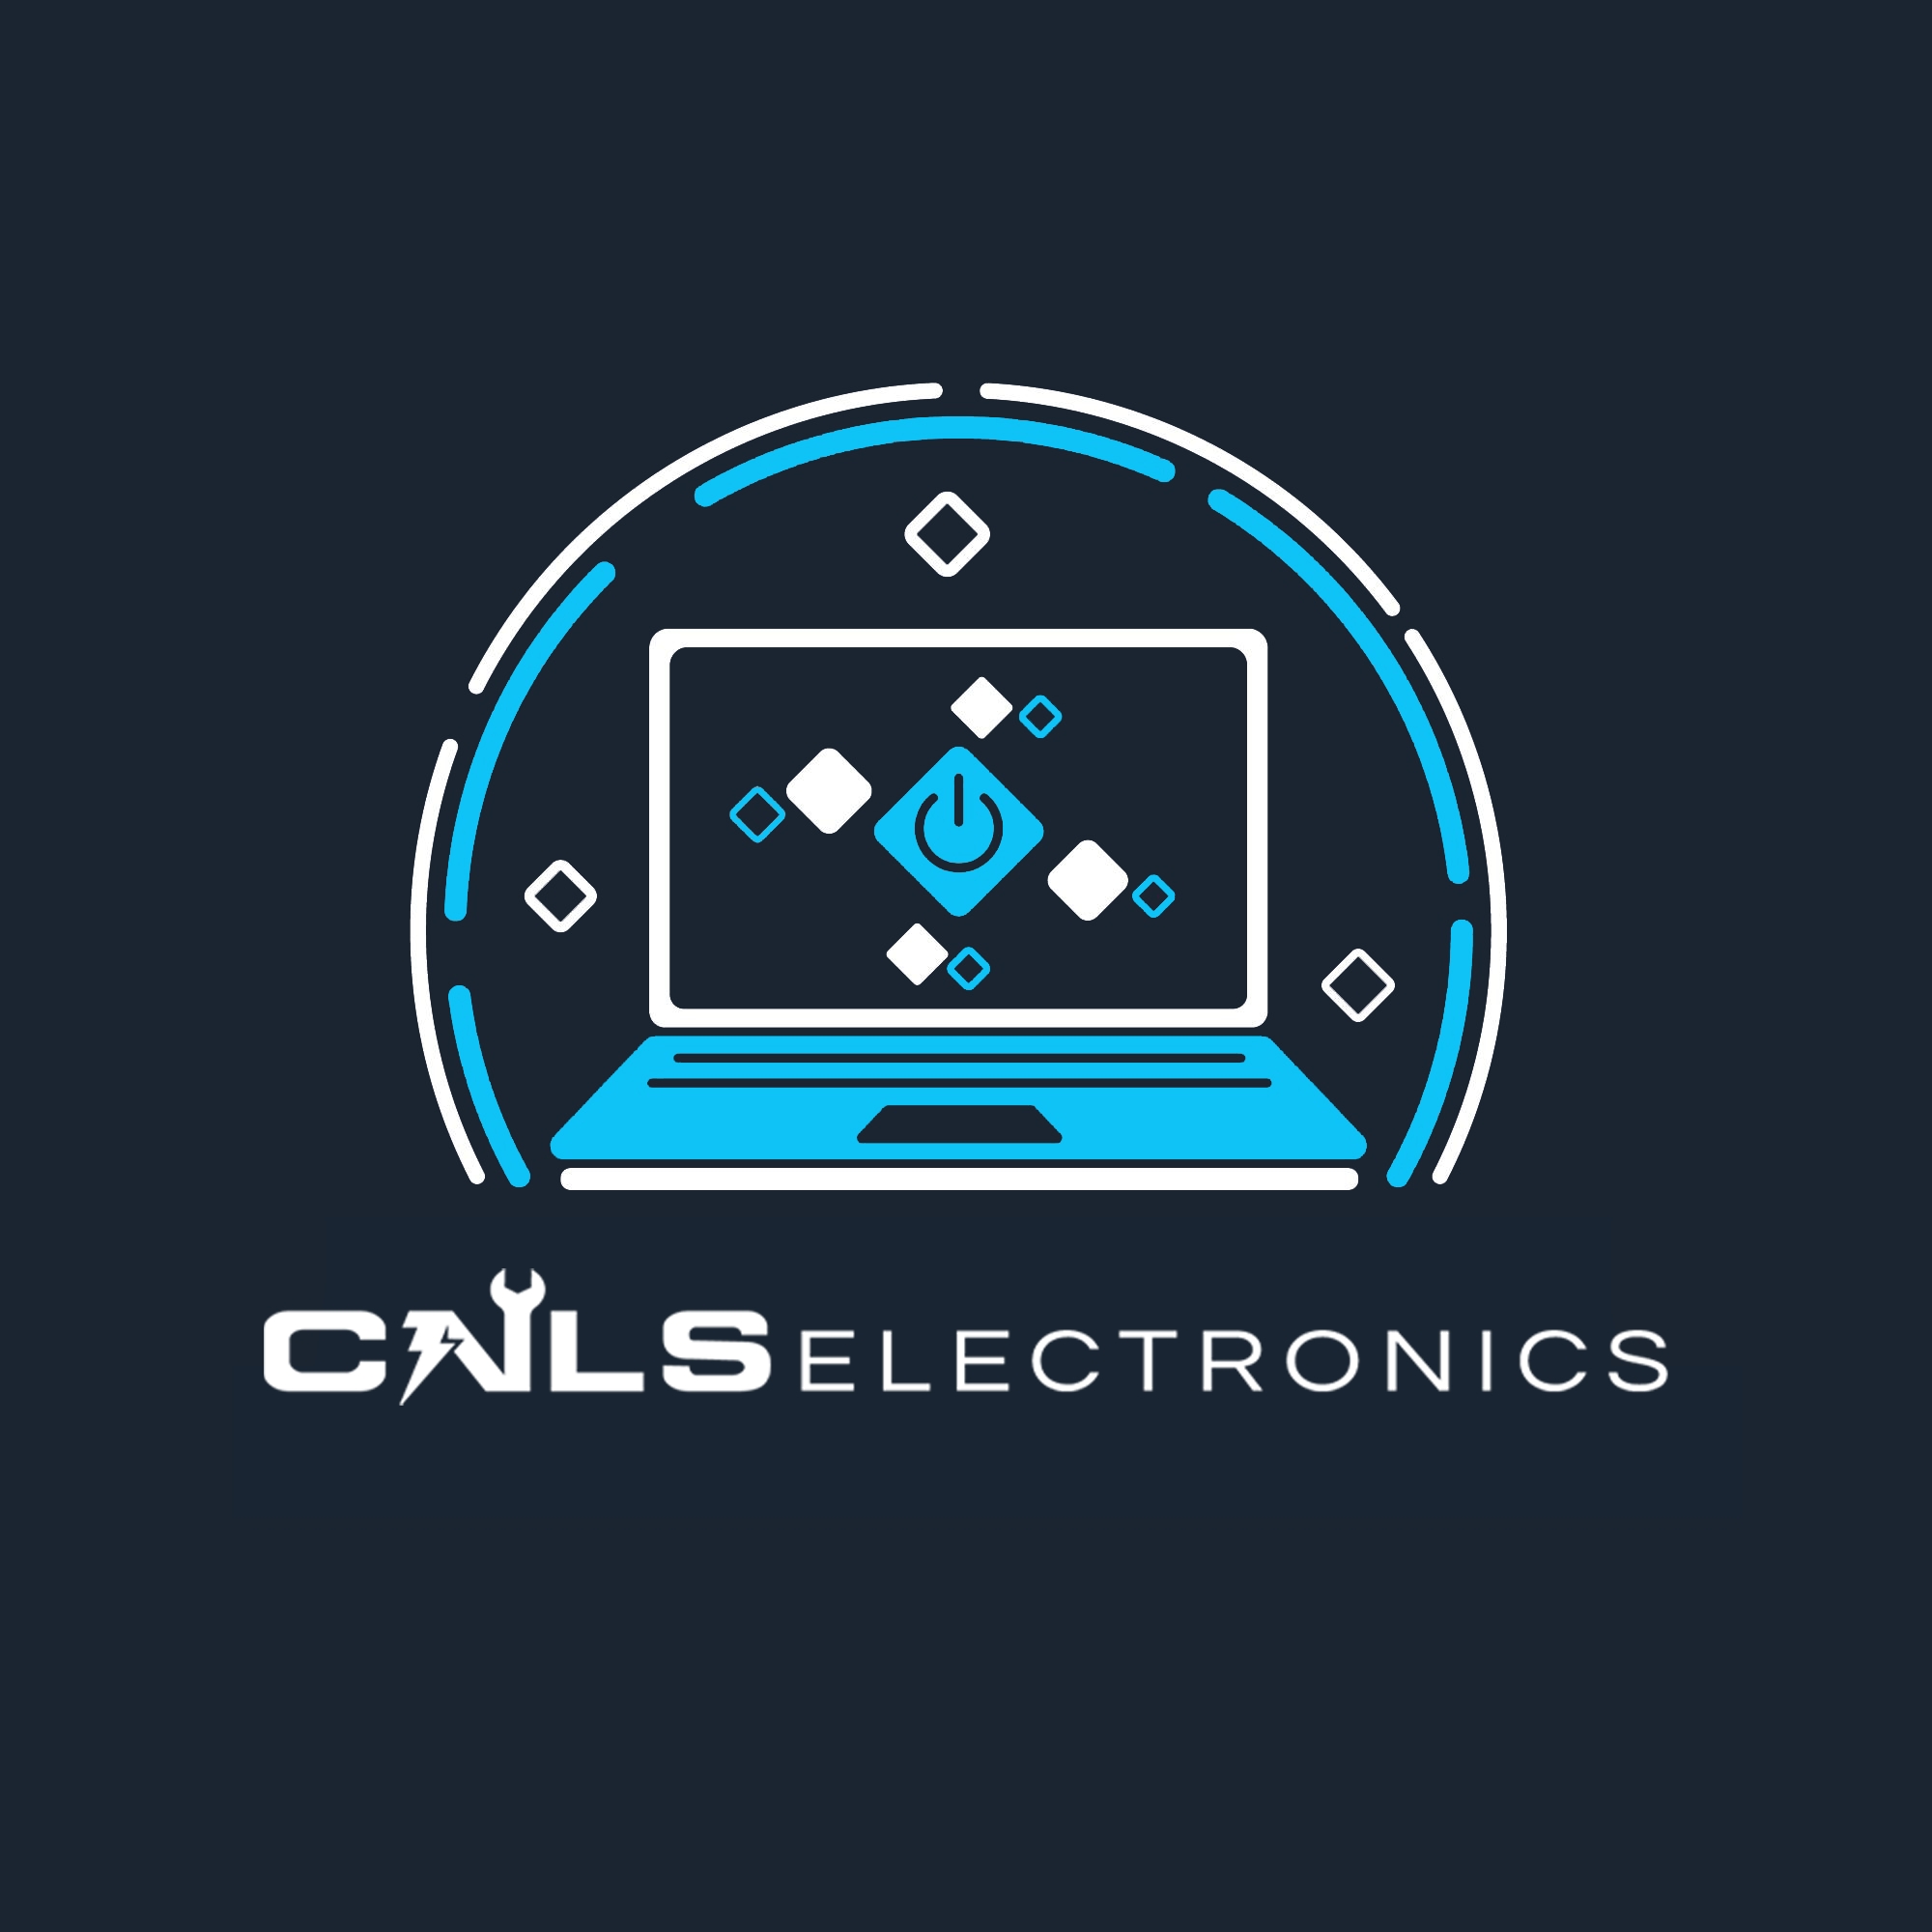 CNLS Electronics